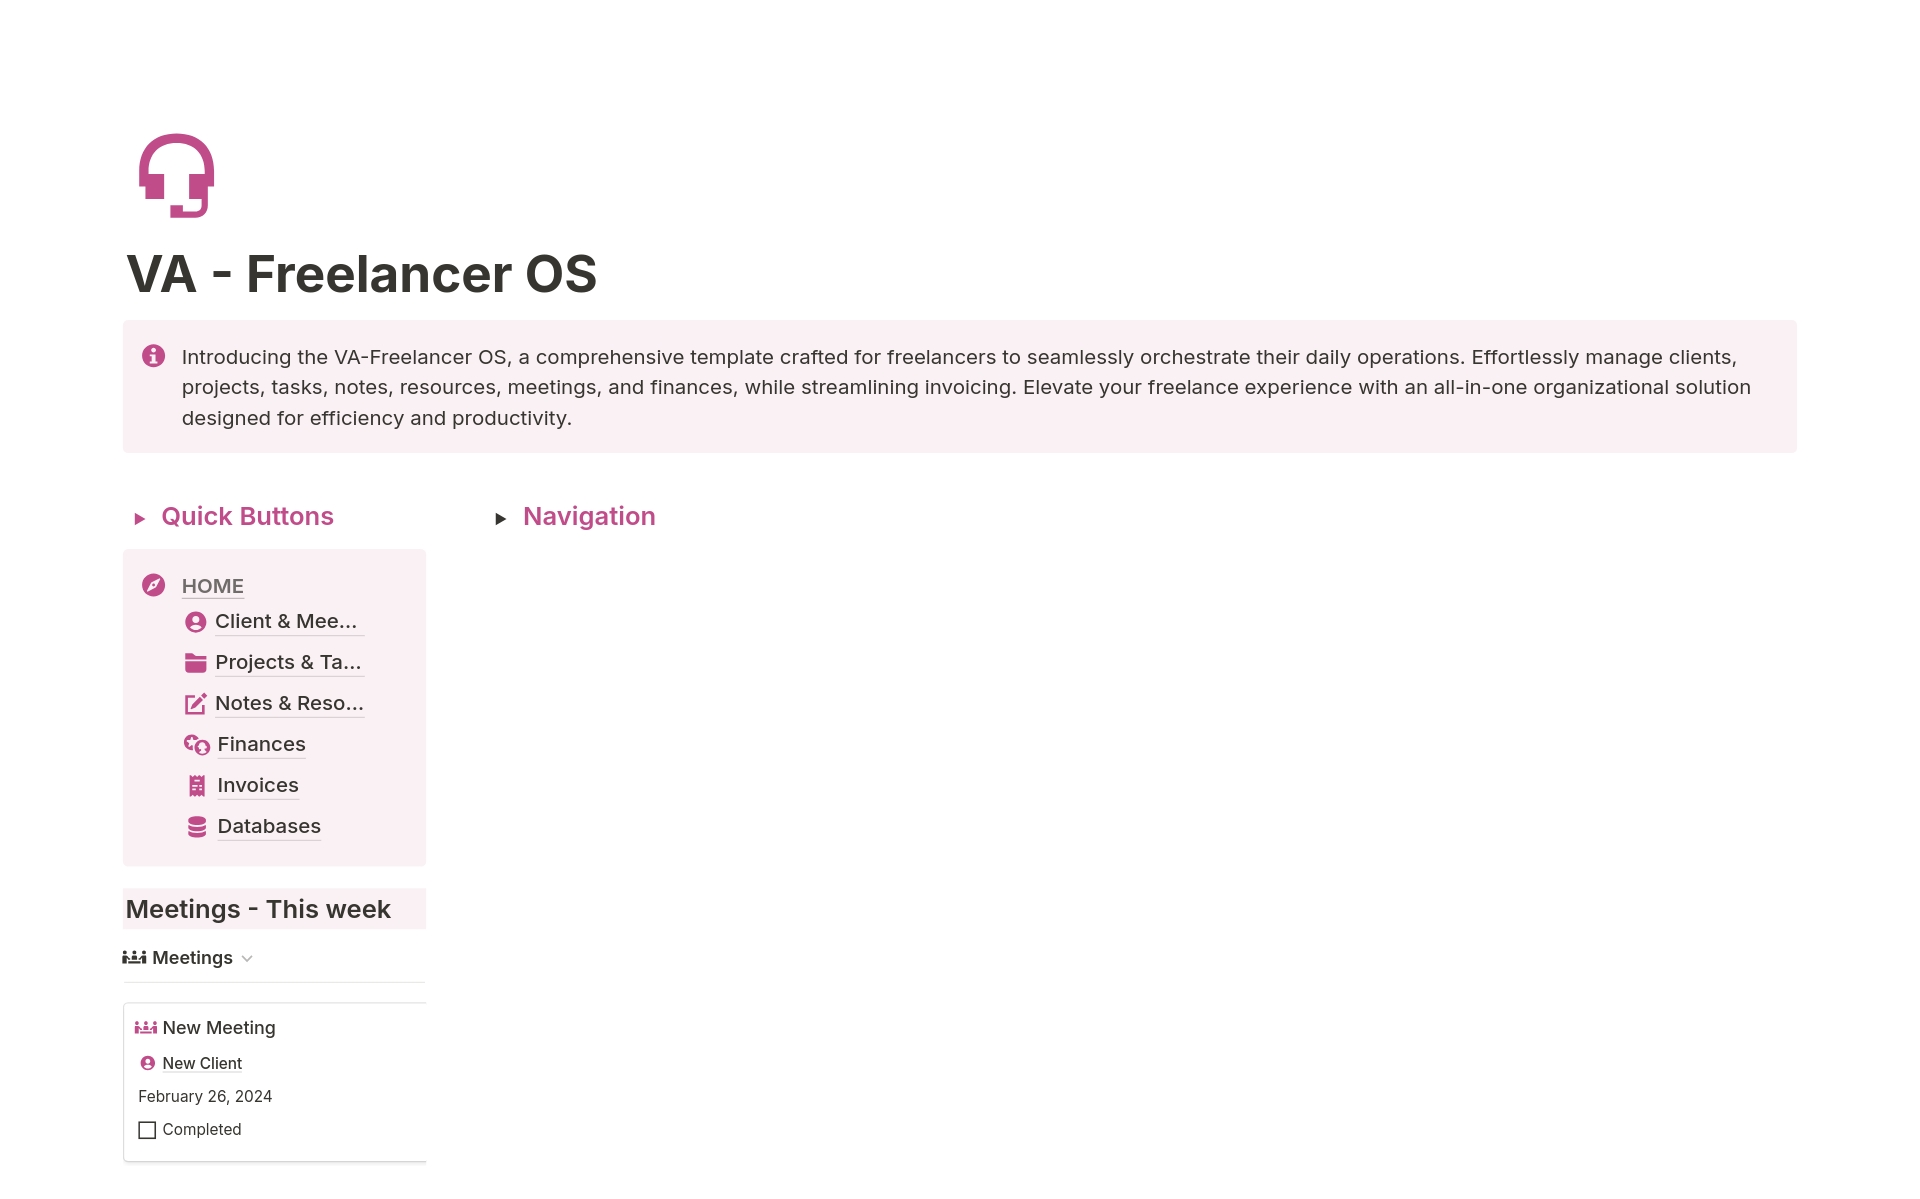 Vista previa de una plantilla para VA-Freelancer OS